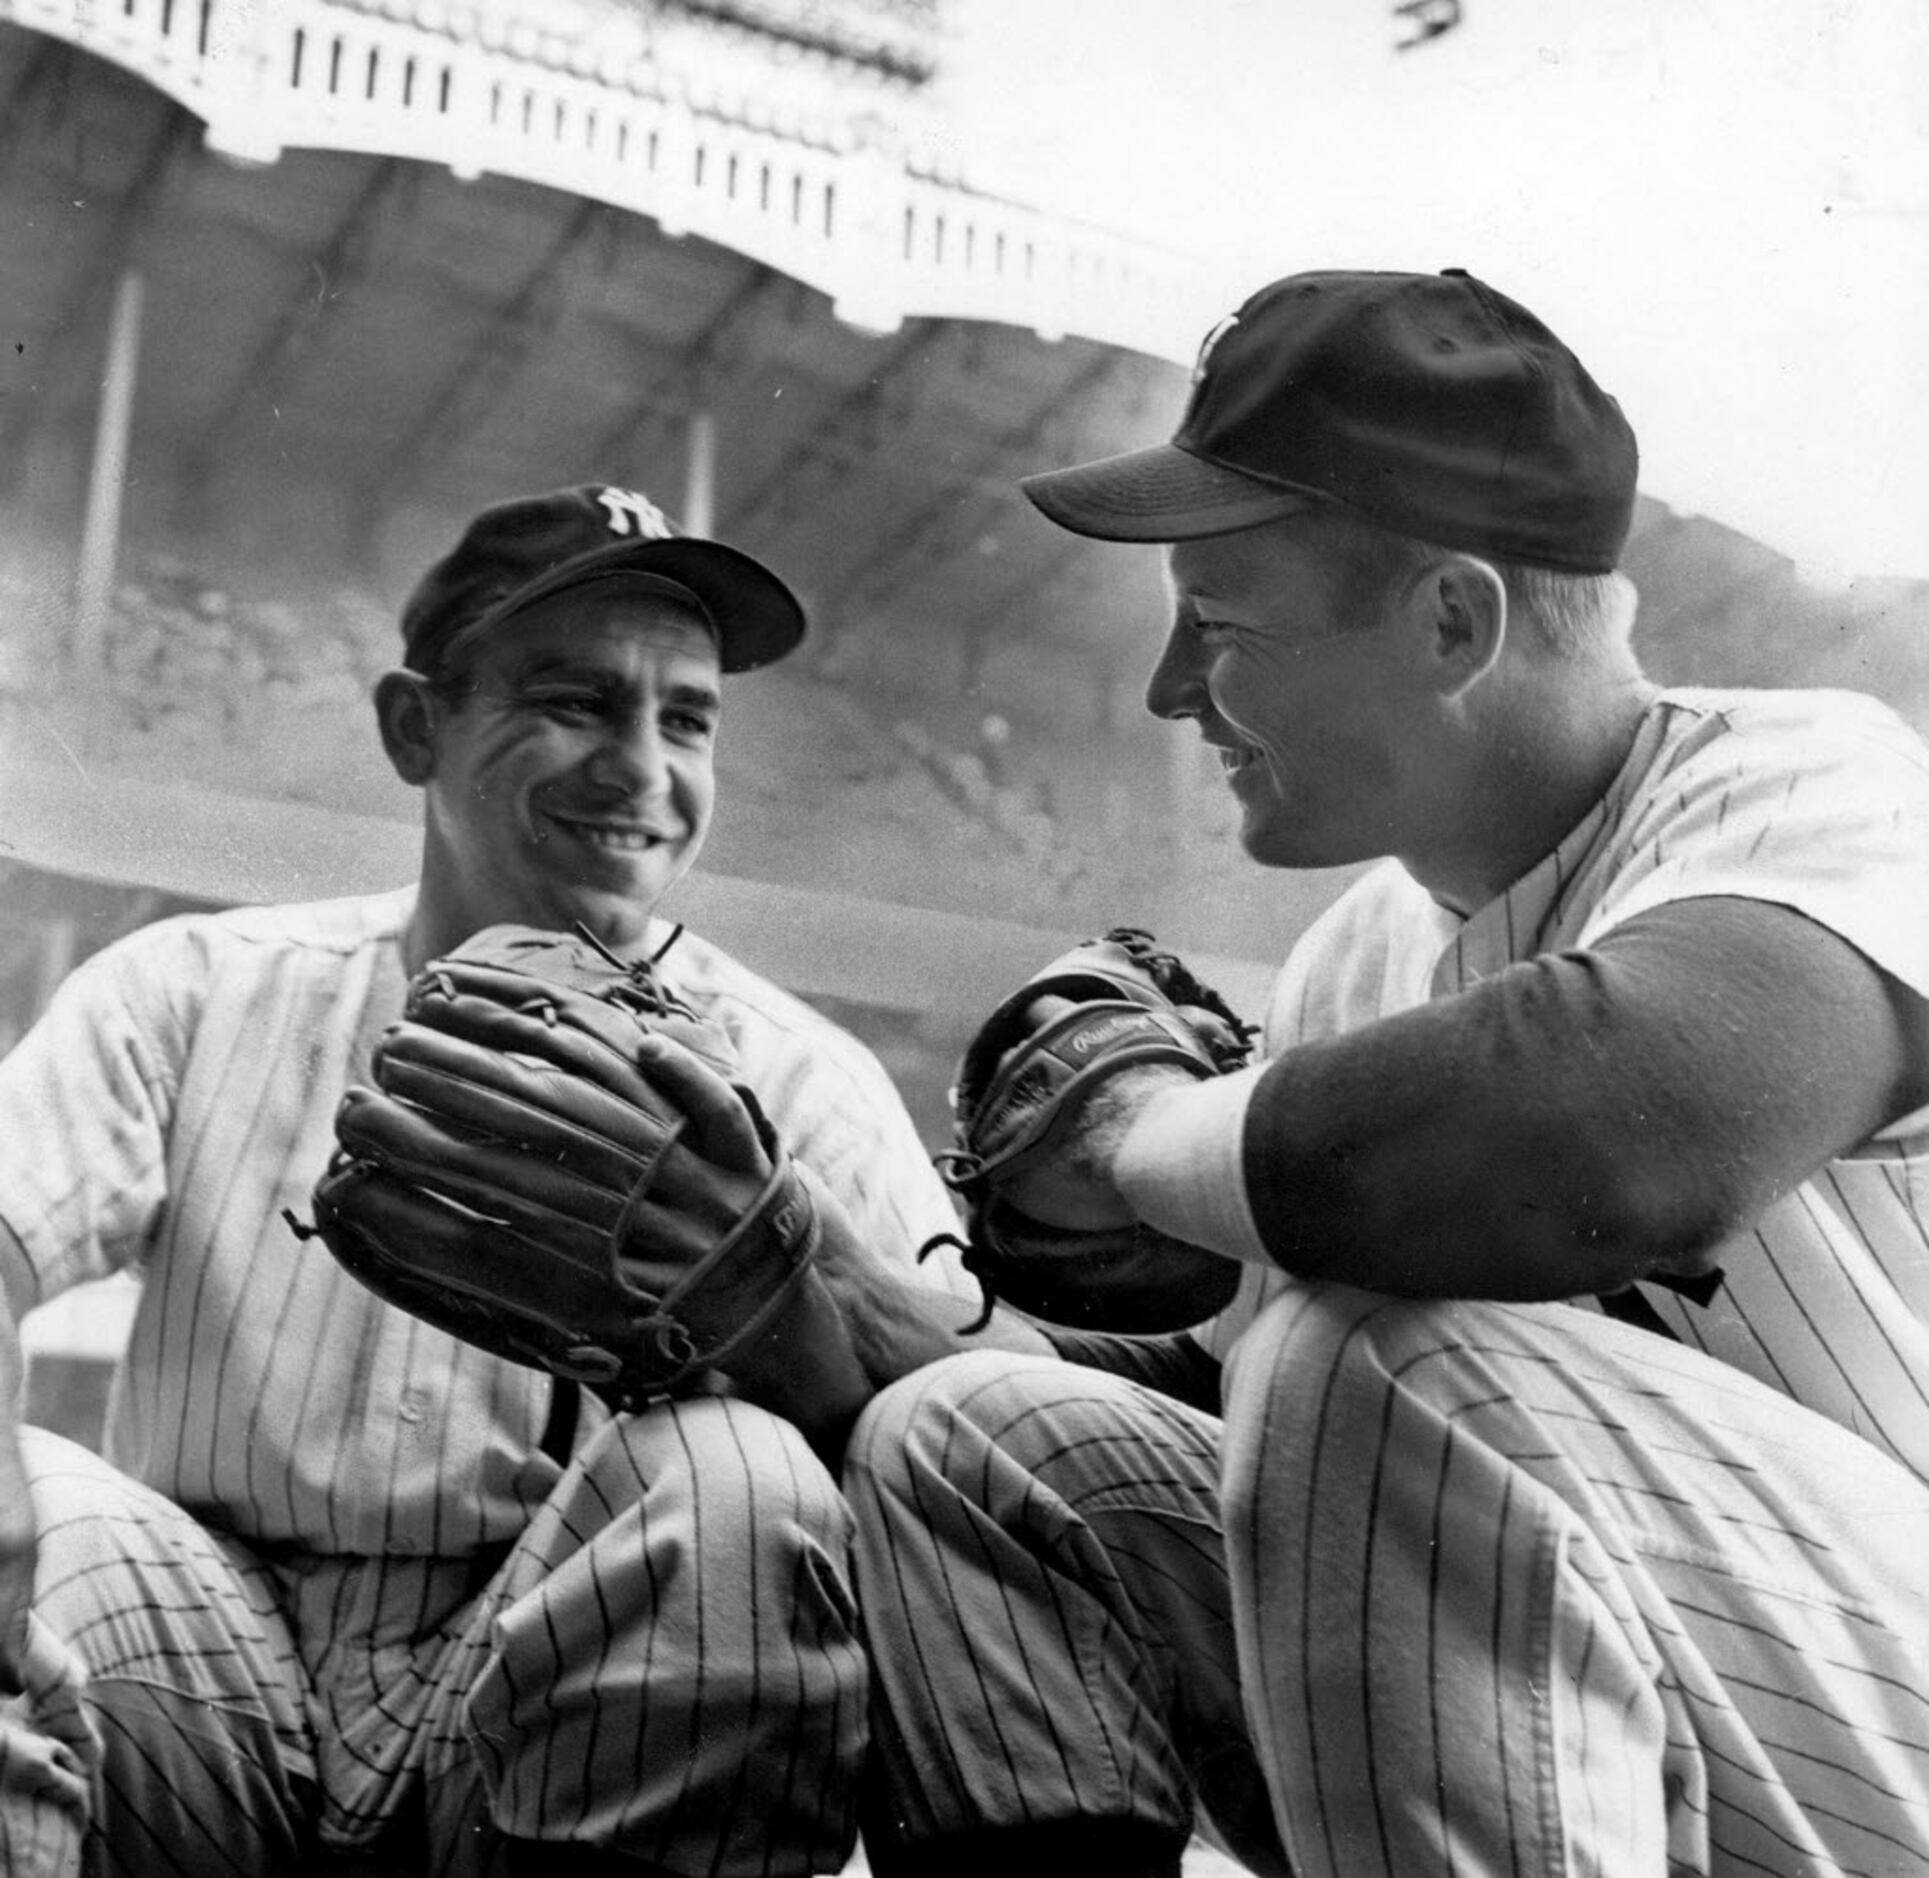 Hall of Famer and New York Yankees legend Yogi Berra dies at the